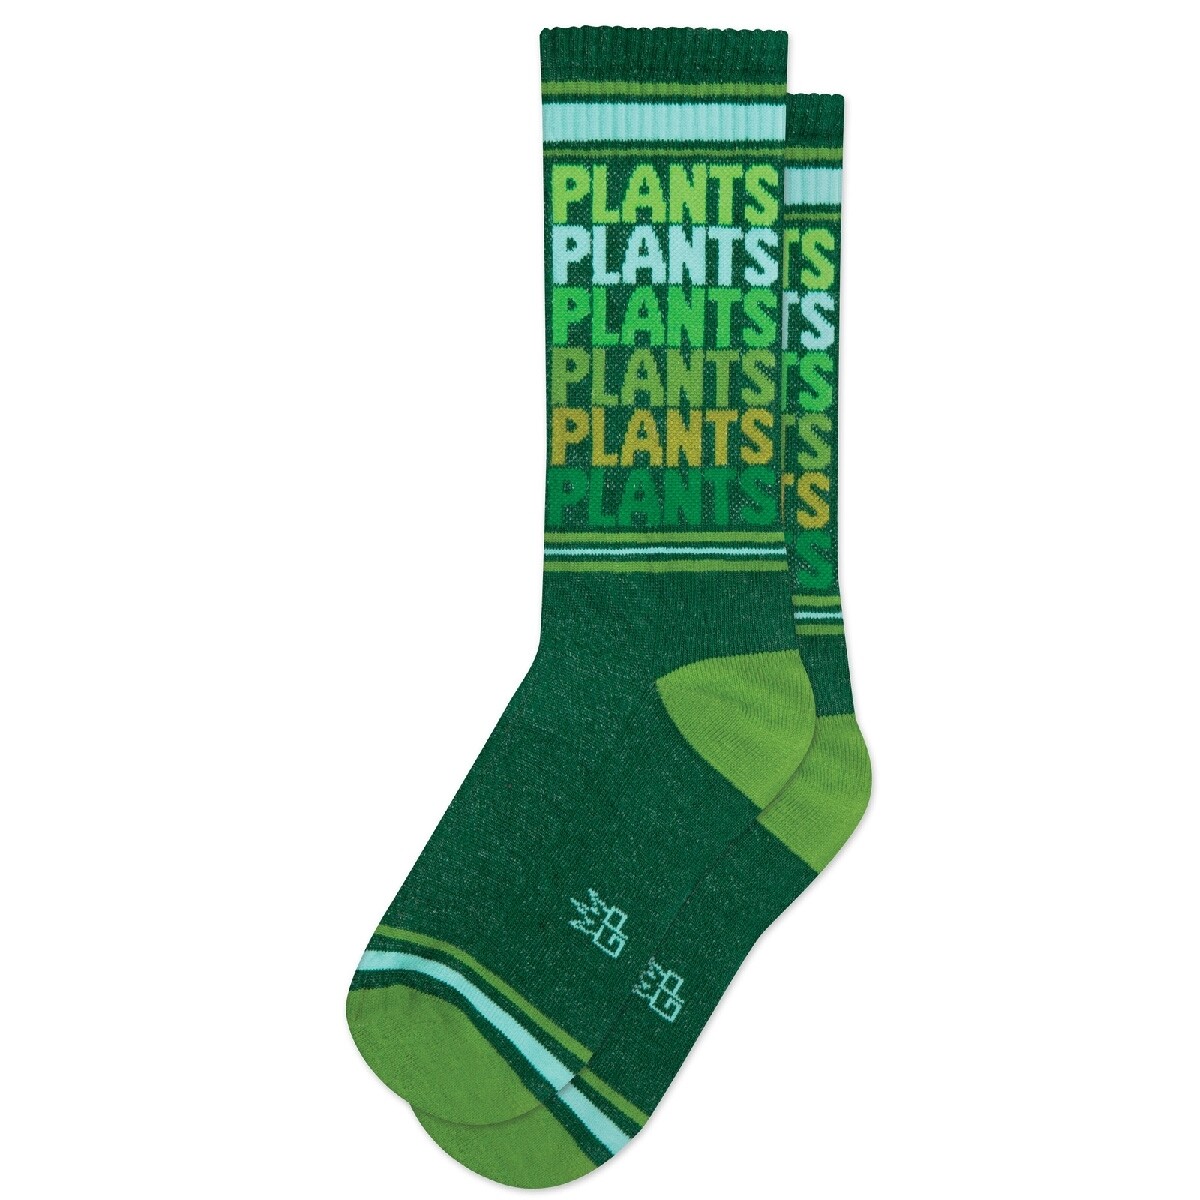 Plants Plants Socks